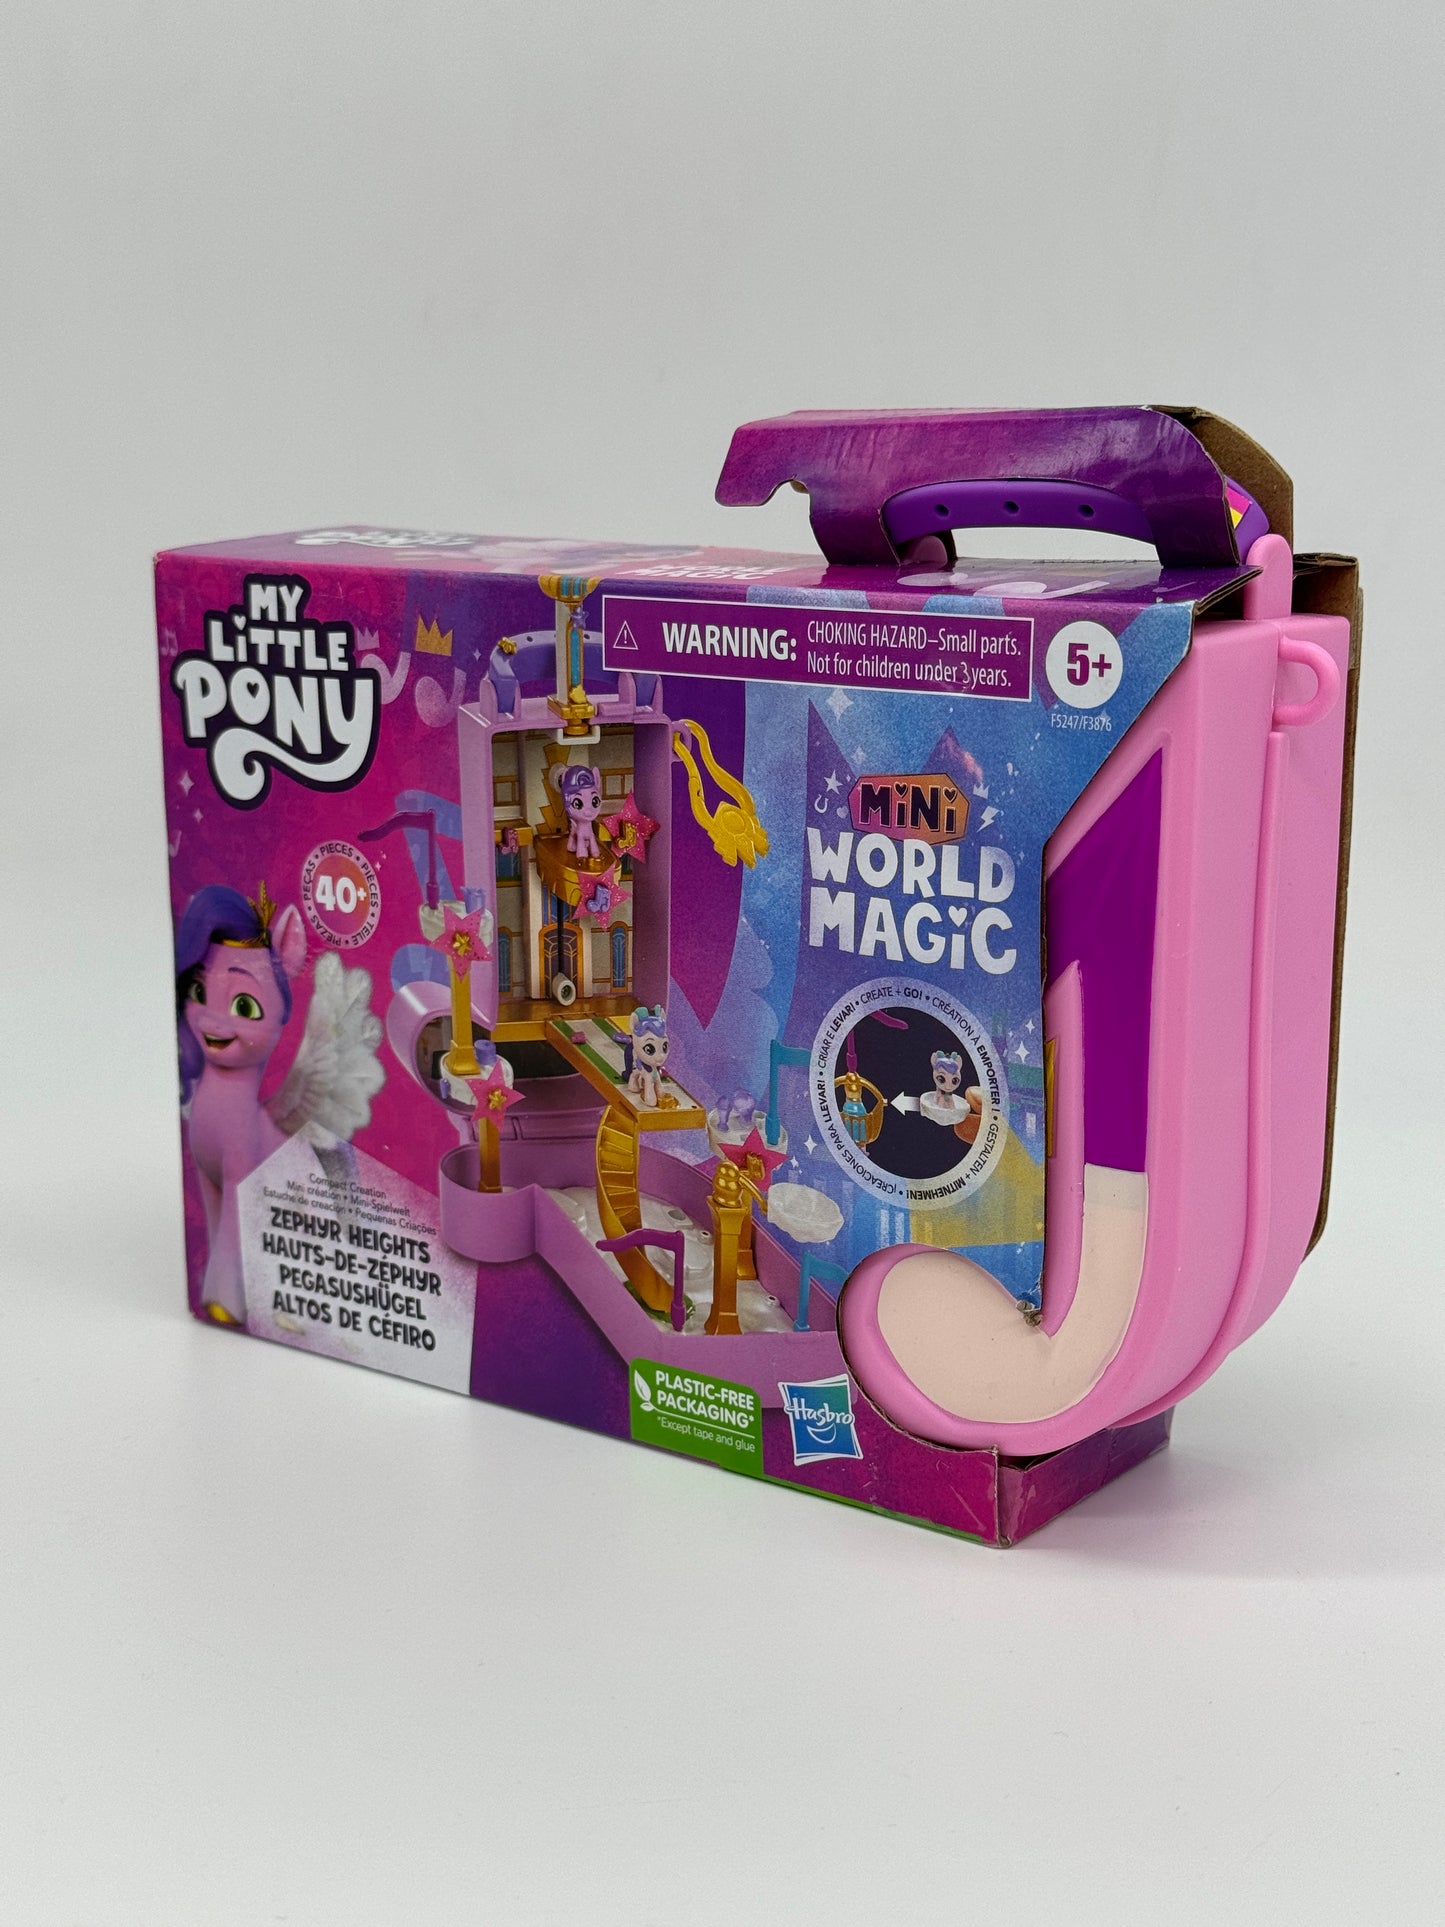 My Little Pony "Mini World Magic" Pegasushügel mit Wasserenthüllungseffekt 40 Teile